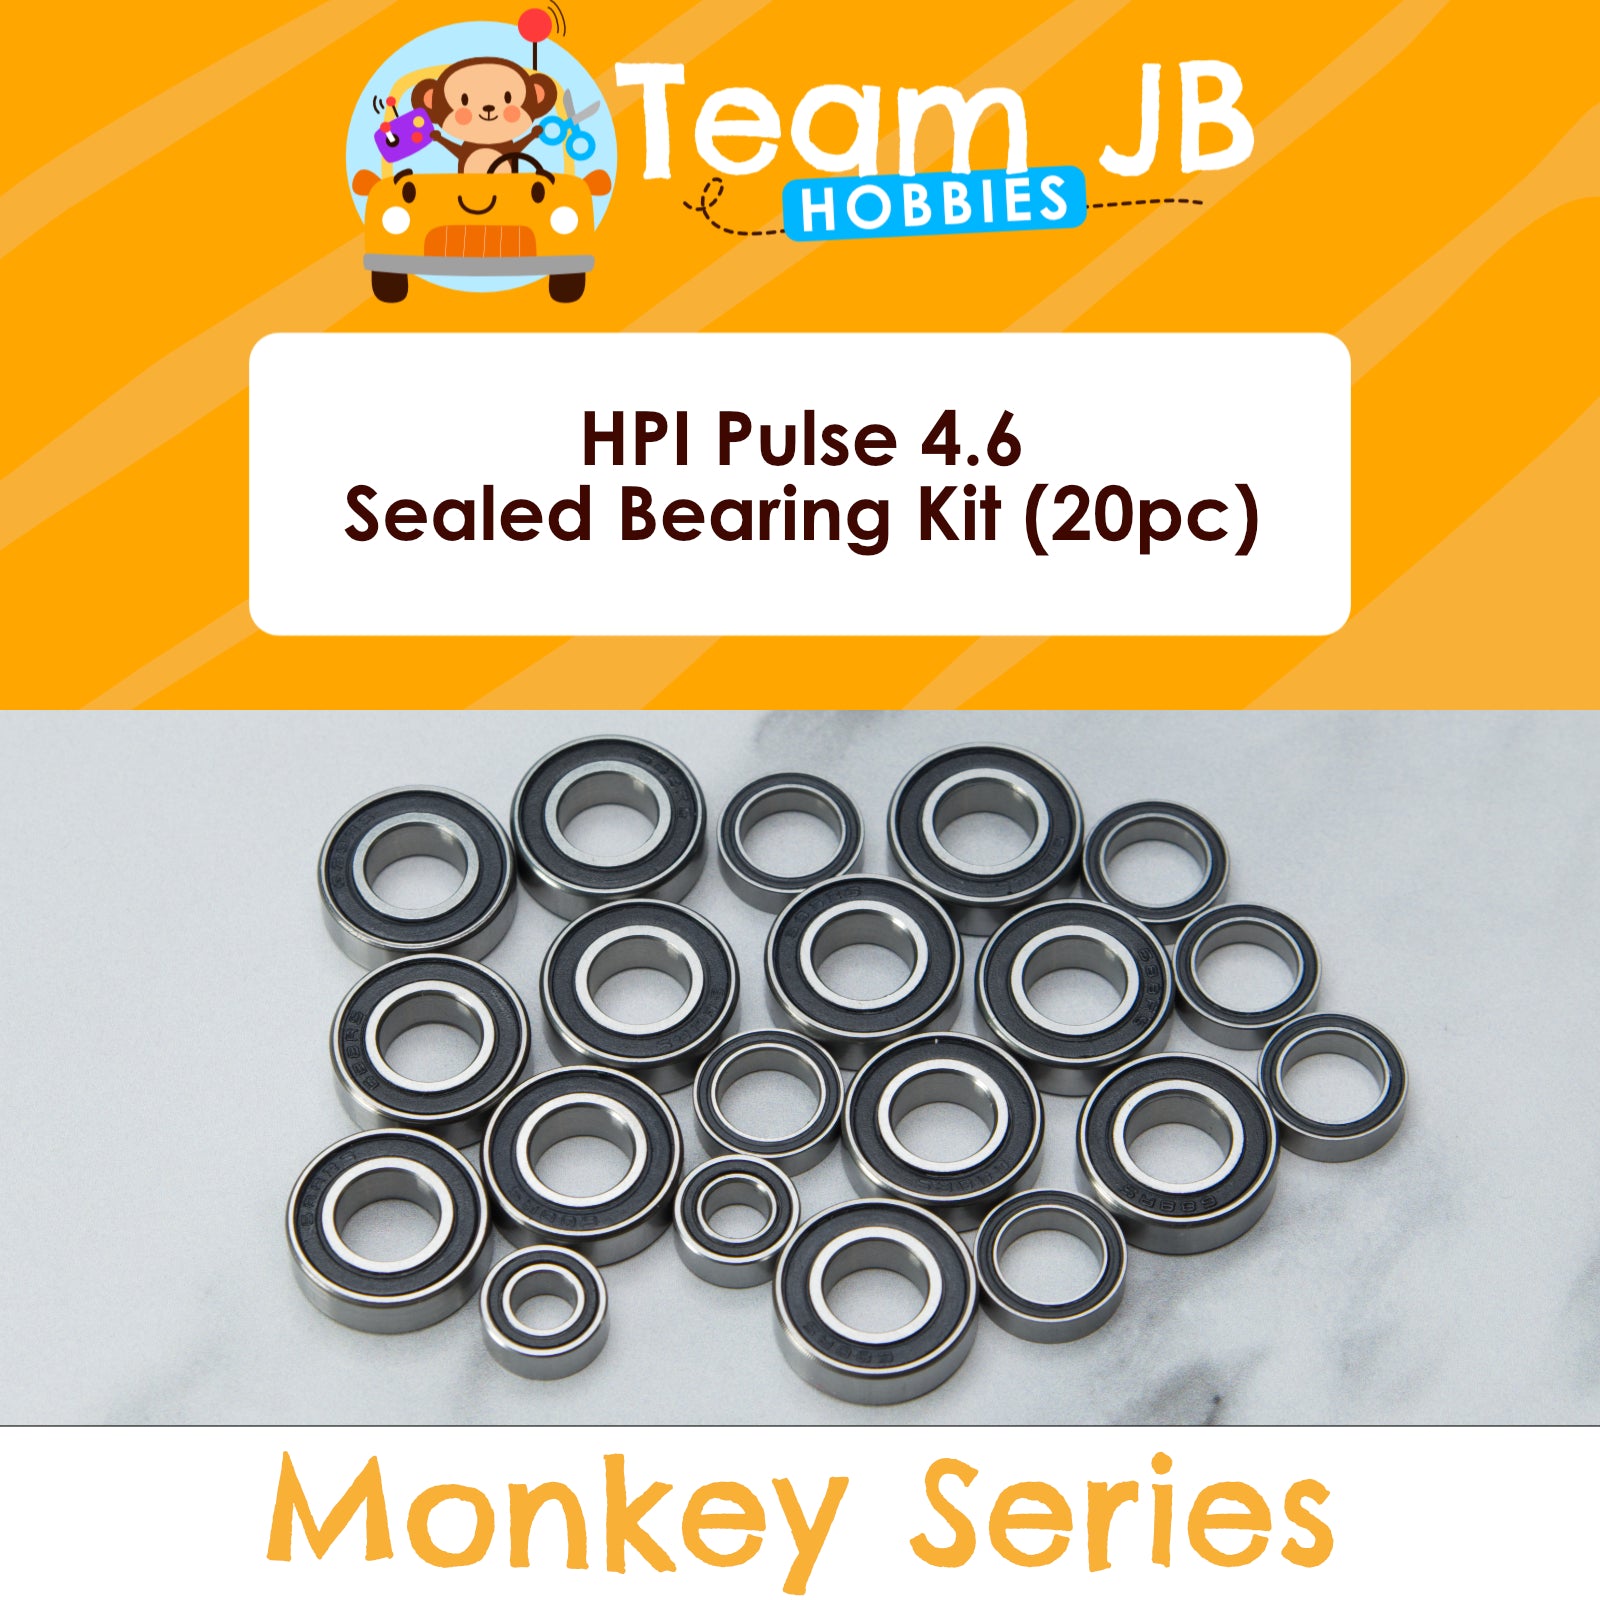 HPI Pulse 4.6 - Sealed Bearing Kit